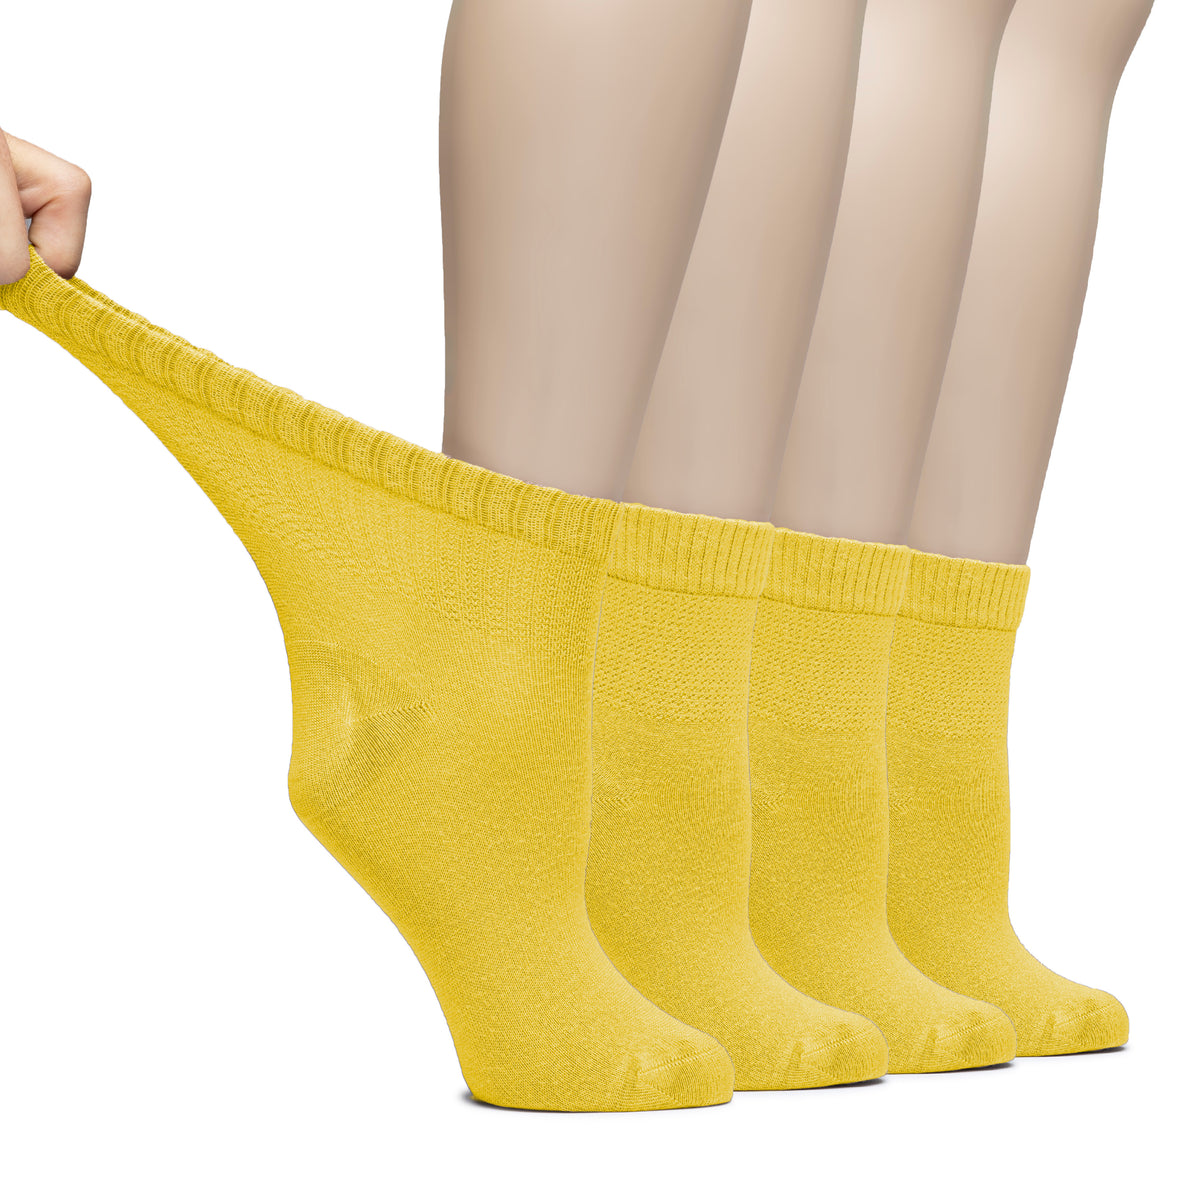 Hugh Ugoli Lightweight Women's Diabetic Ankle Socks Bamboo Thin Socks Seamless Toe and Non-Binding Top, 4 Pairs, , Shoe Size: 6-9/10-12 | Shoe Size: 10-12 | Yellow